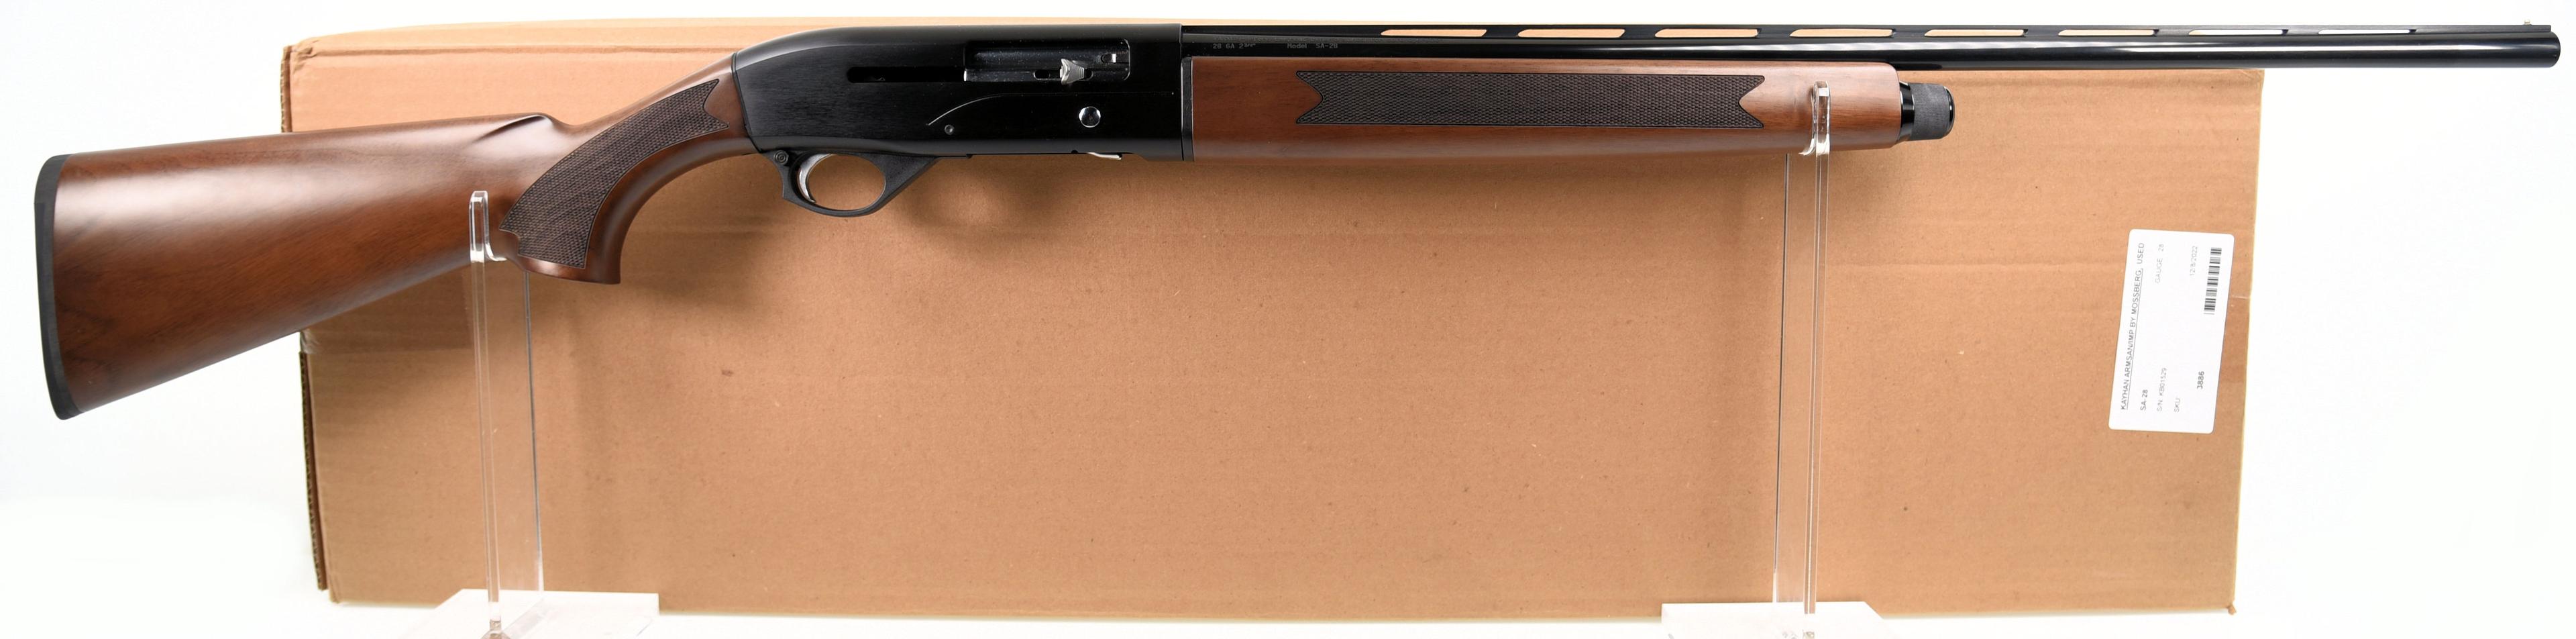 Kayhan Armsan/Imp by Mossberg Intl SA-28 Semi Auto Shotgun